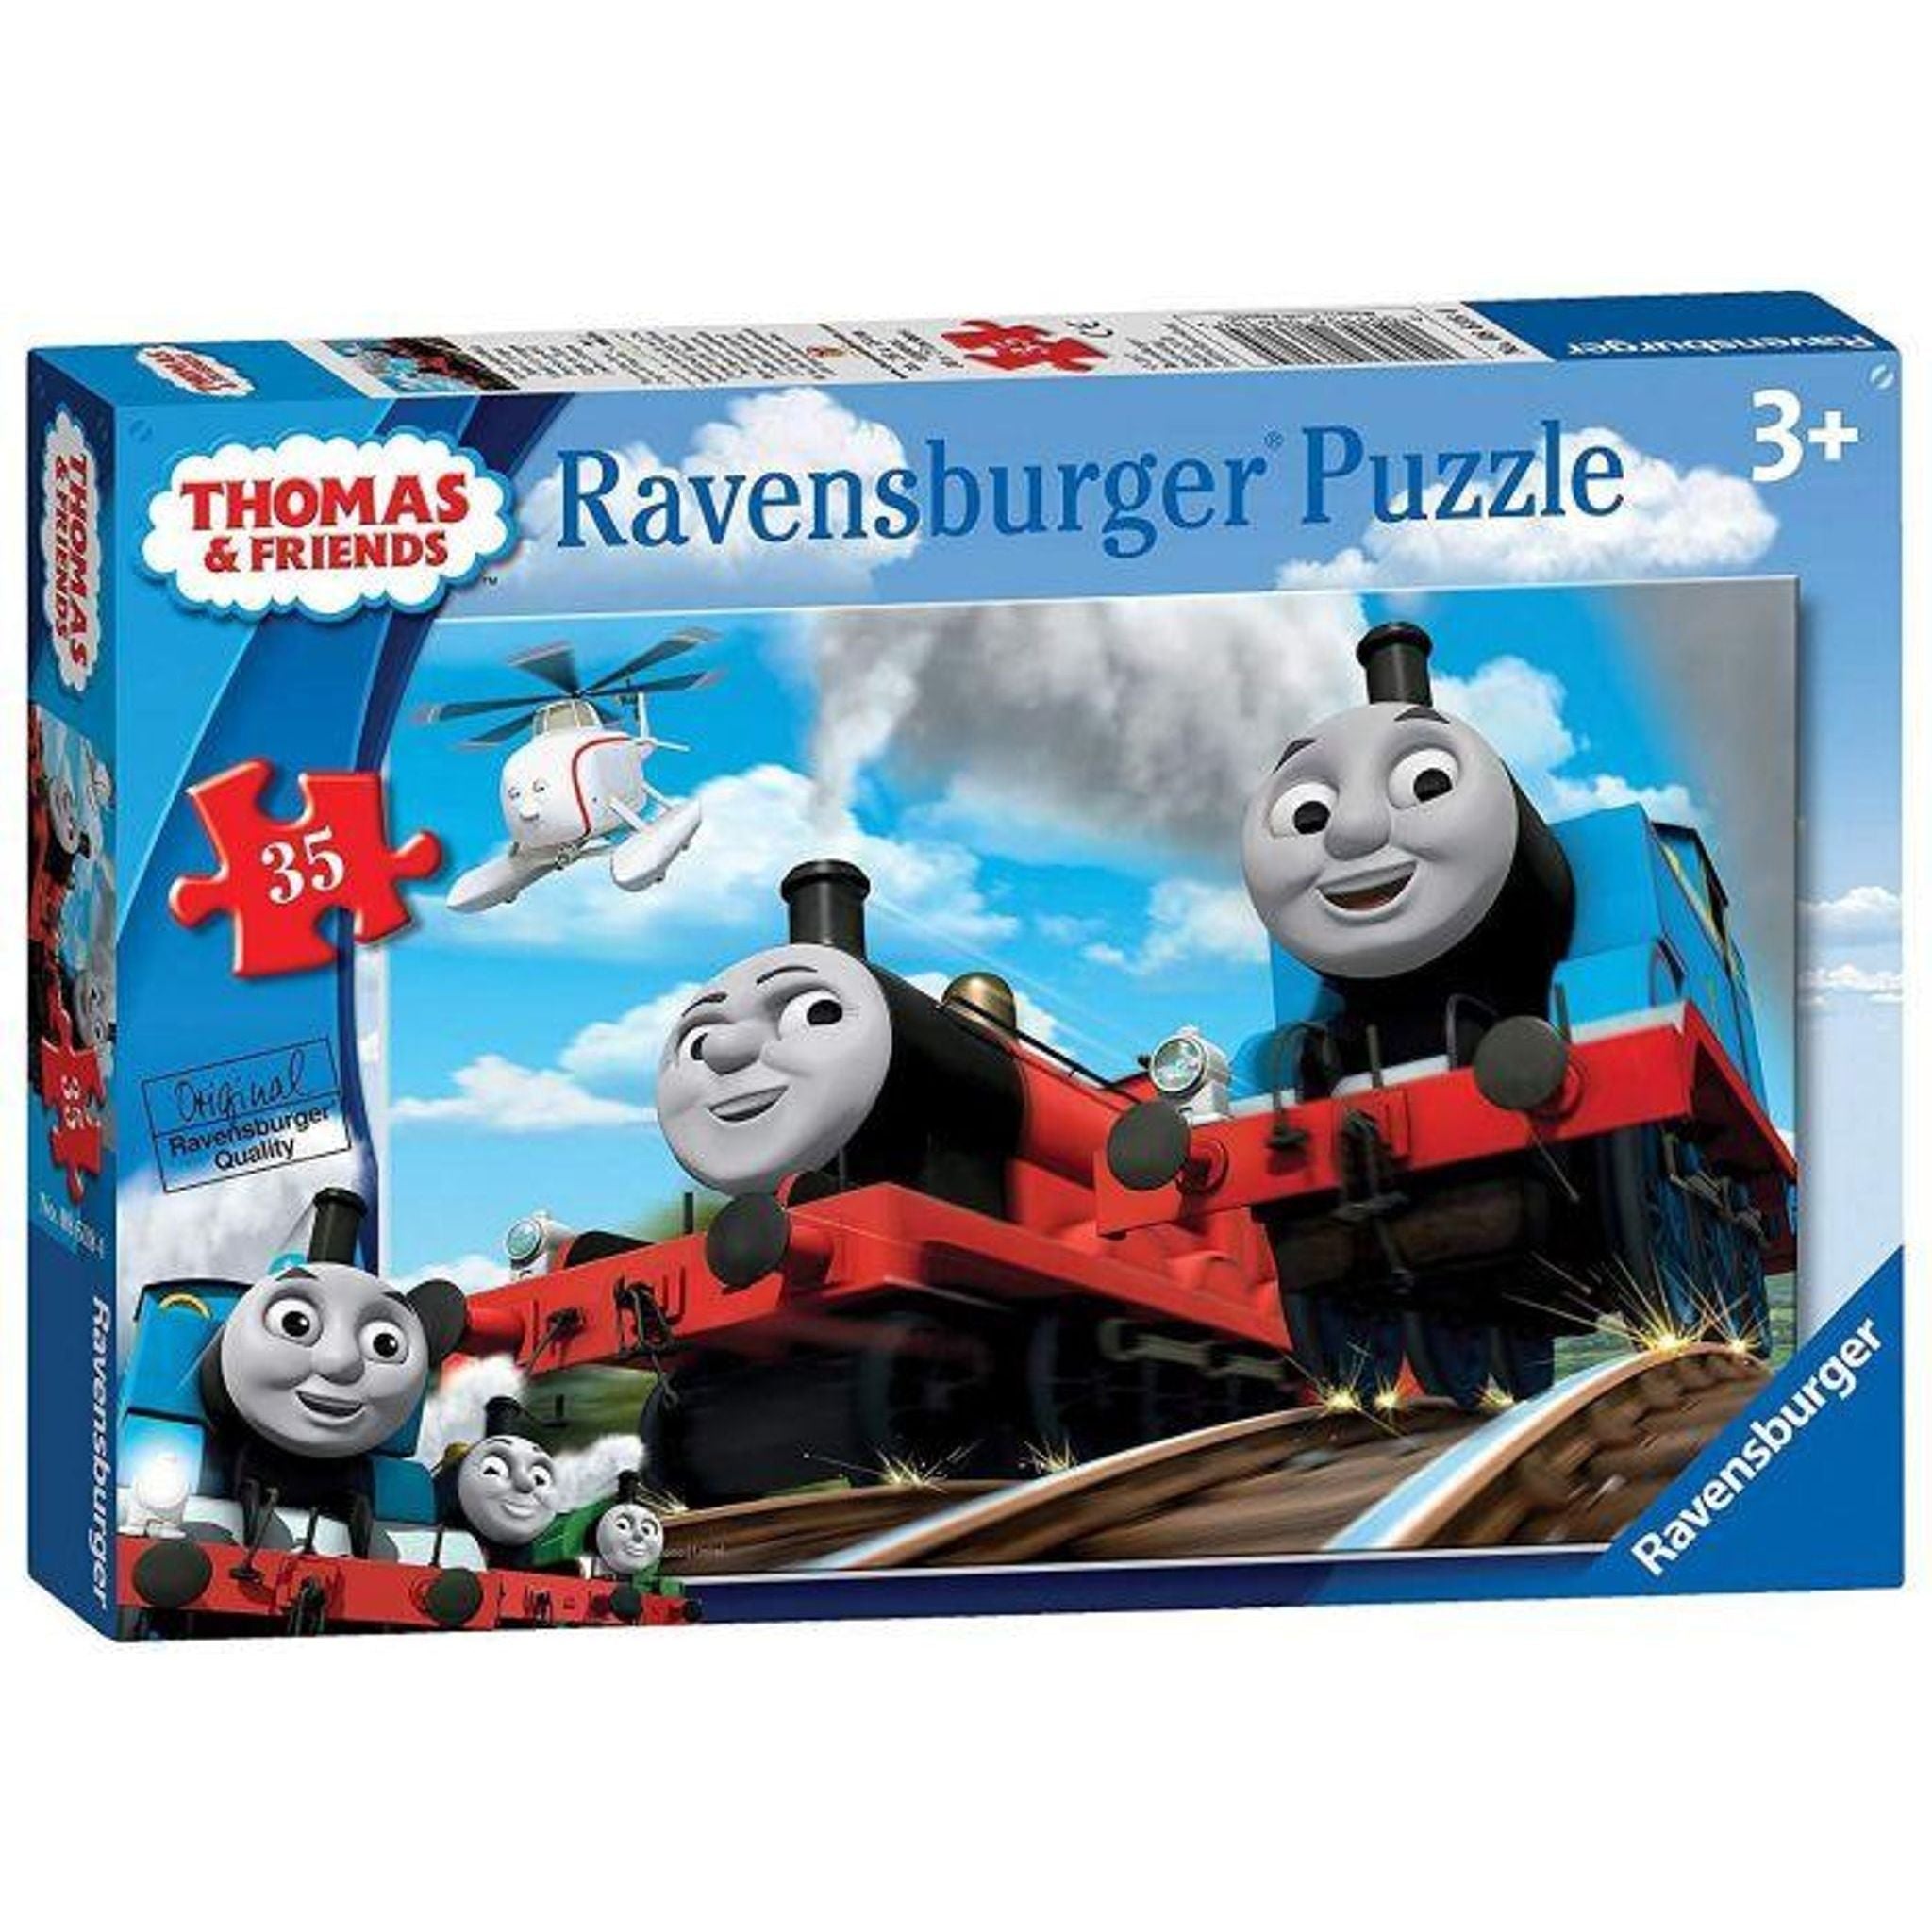 Ravensburger - 35 Piece Thomas the Tank Engine Puzzle - Toybox Tales